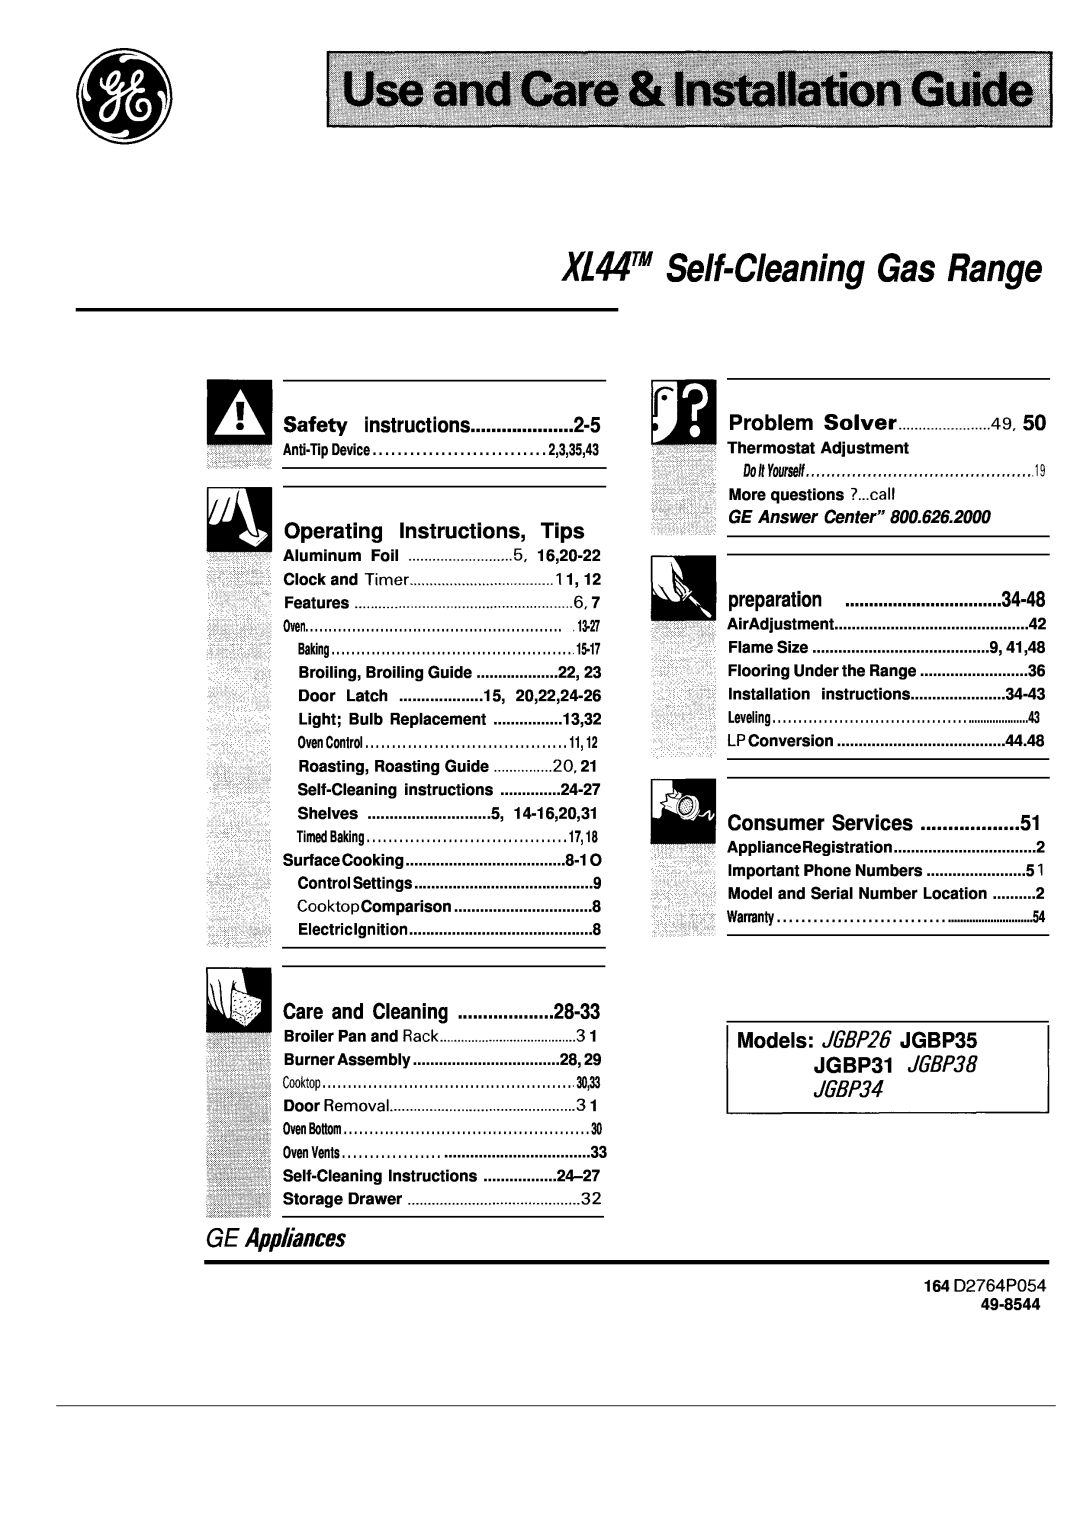 GE JG5P34, JG5P38, JGBP26 manual Xl@TM Self-Cleaning Gas Range, GE Appiances, Operating Instructions, Tips, 28-33, 34-48 